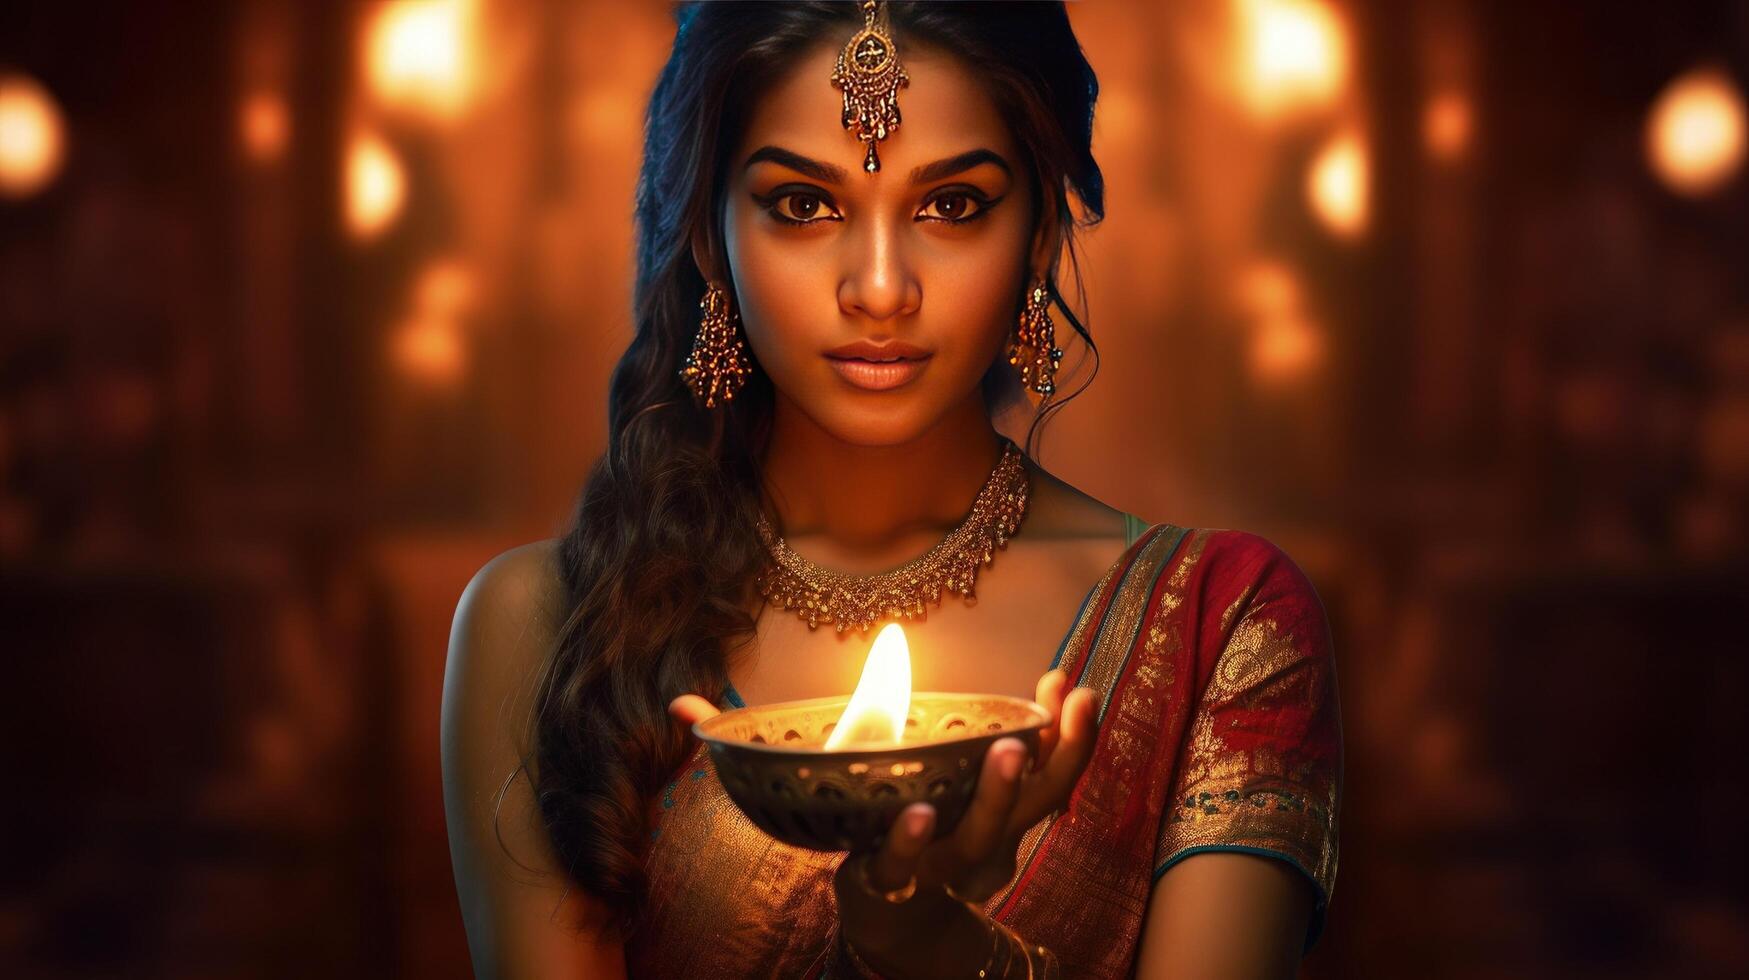 Indian woman holding Diwali oil lamp Illustration photo